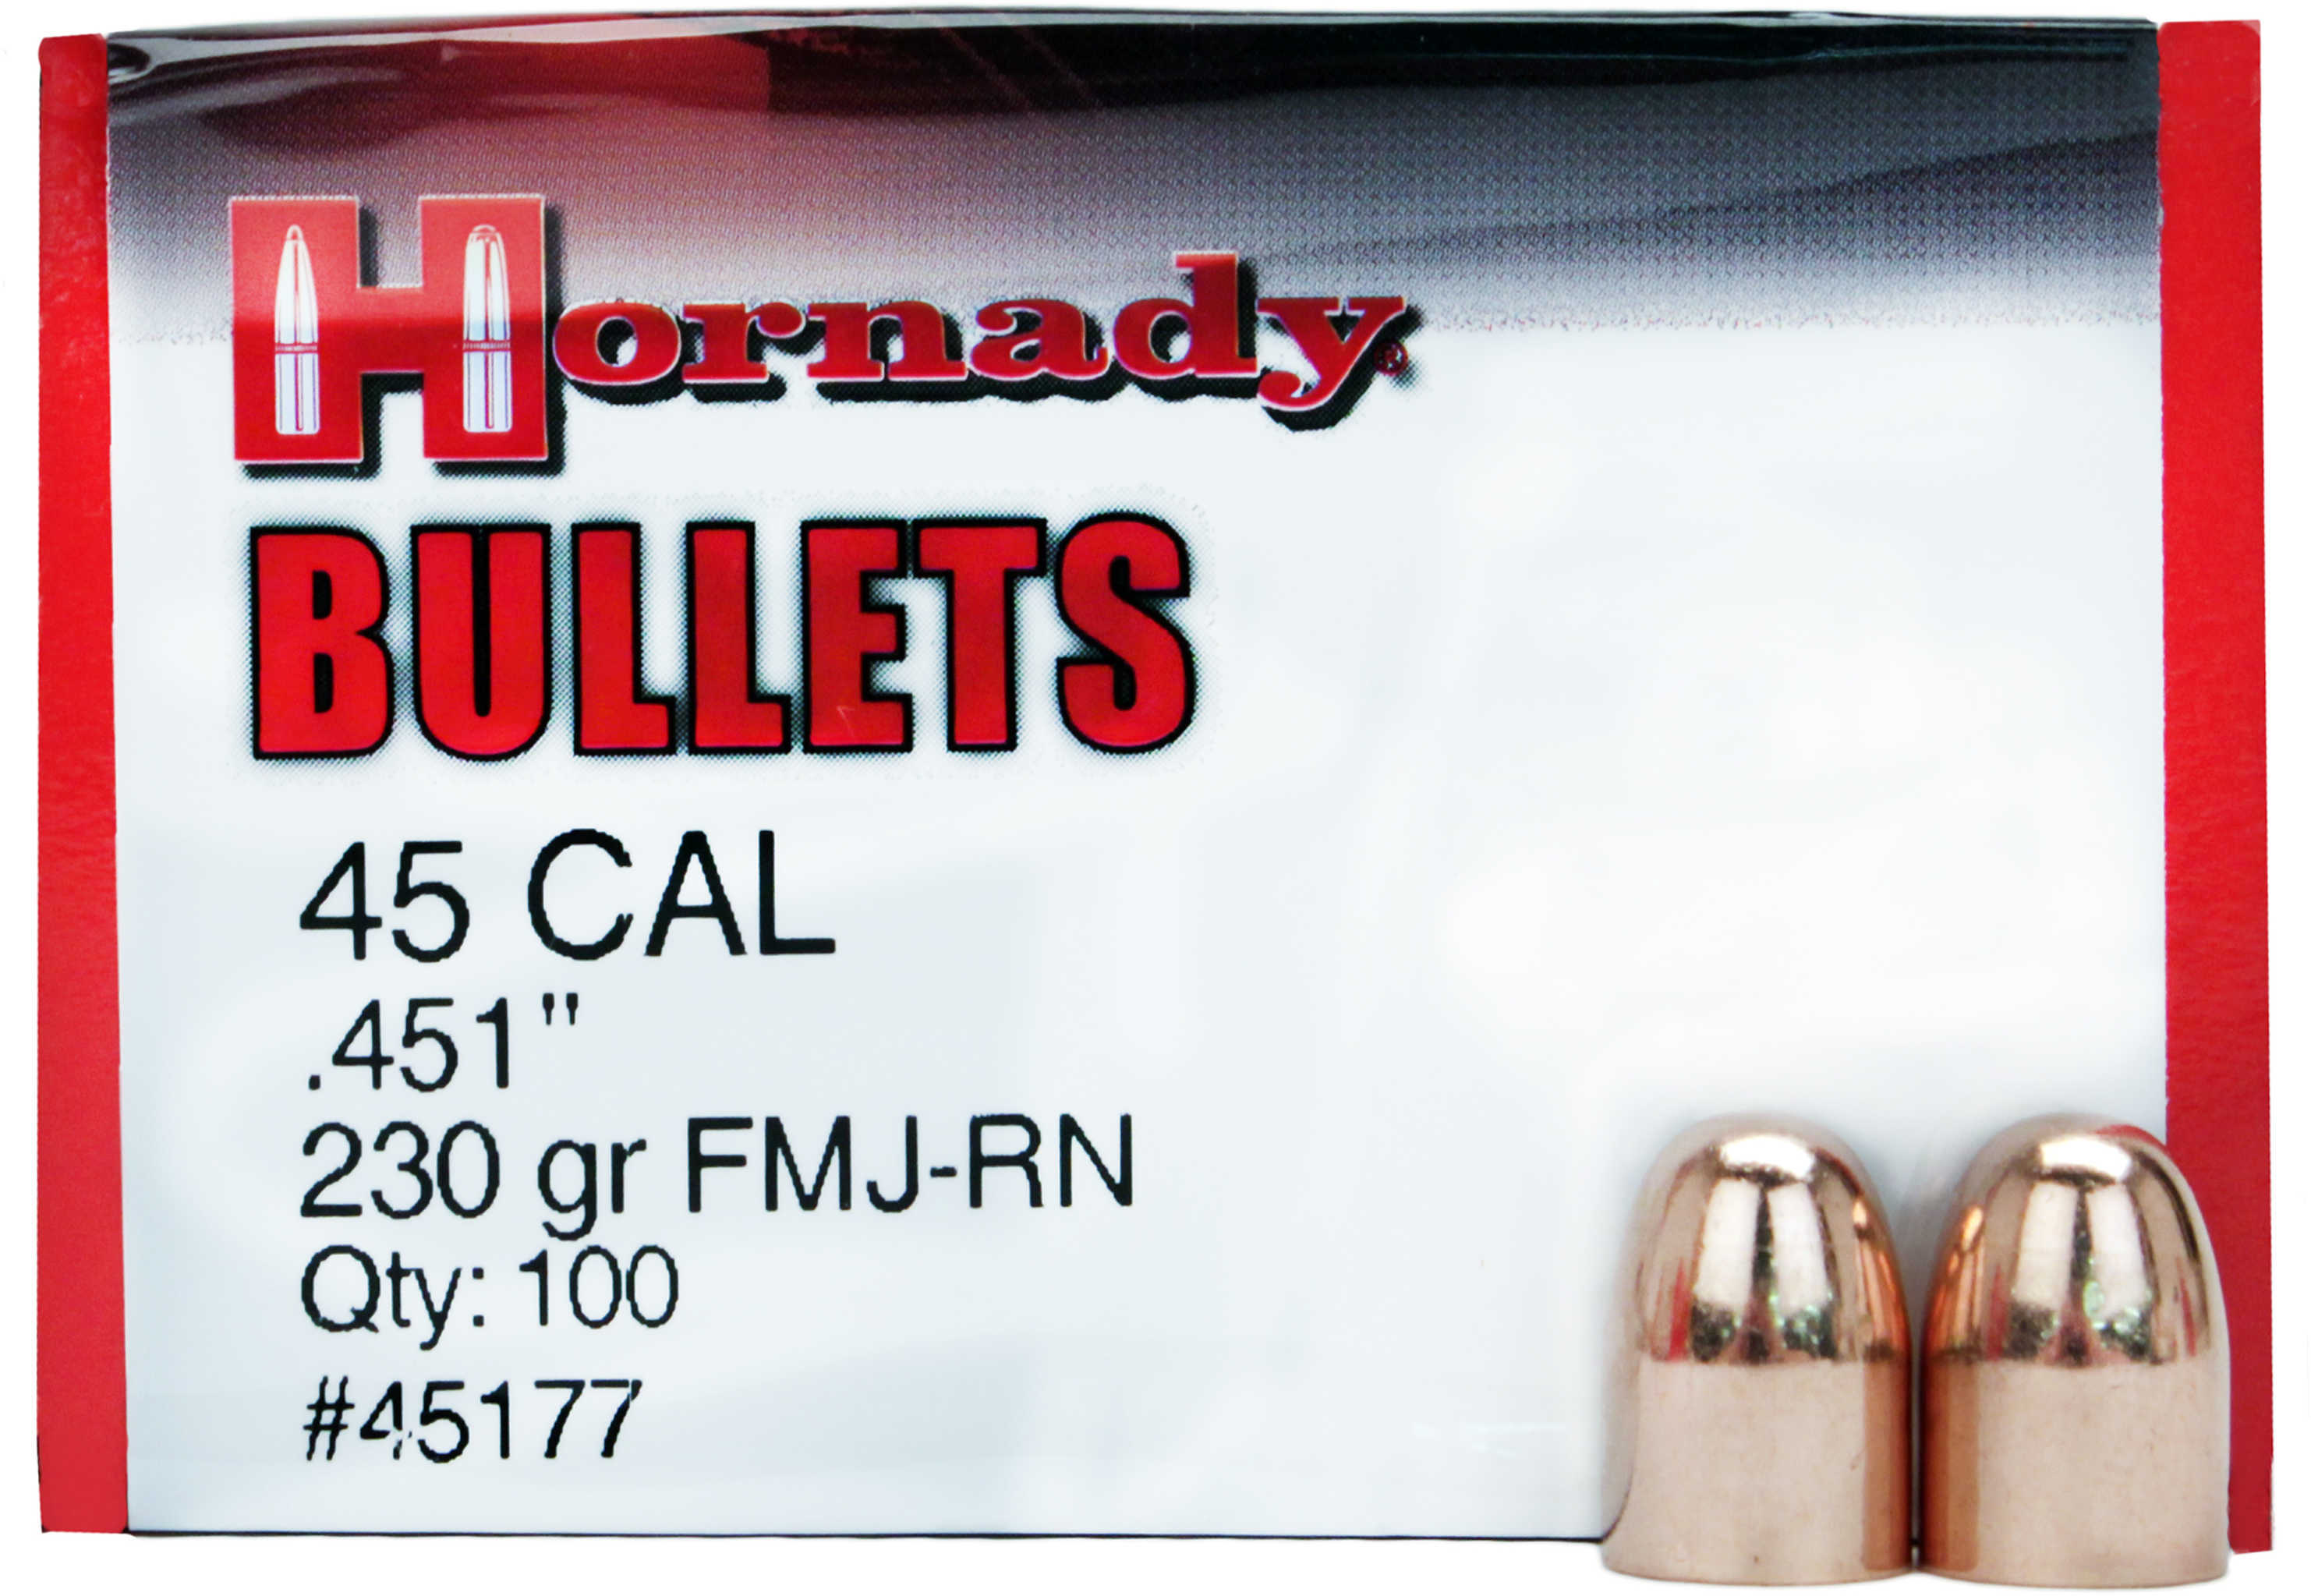 Hornady Bullets 45 Caliber .451 230 Grain FMJ-RN 100CT